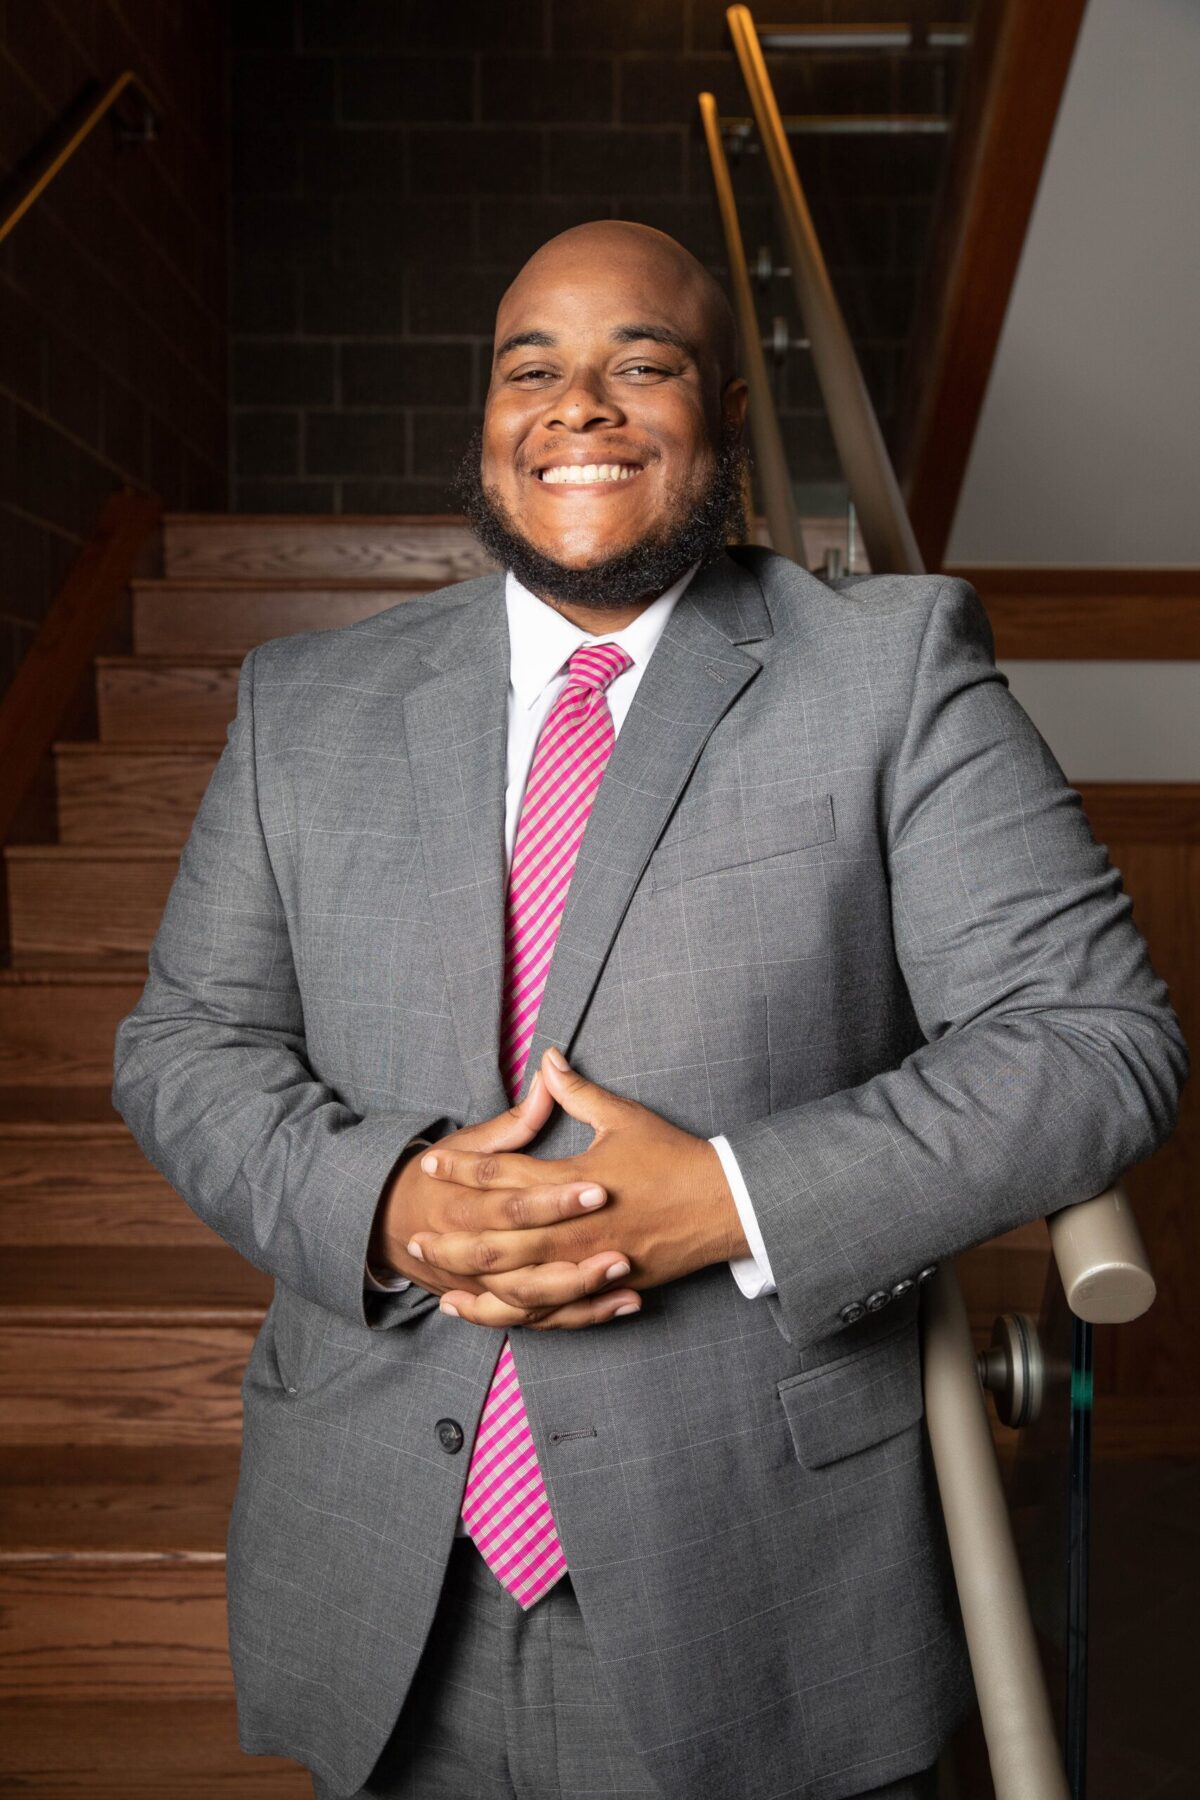 Headshot - Fidel E Benton, black man smiling in gray suit with pink tie